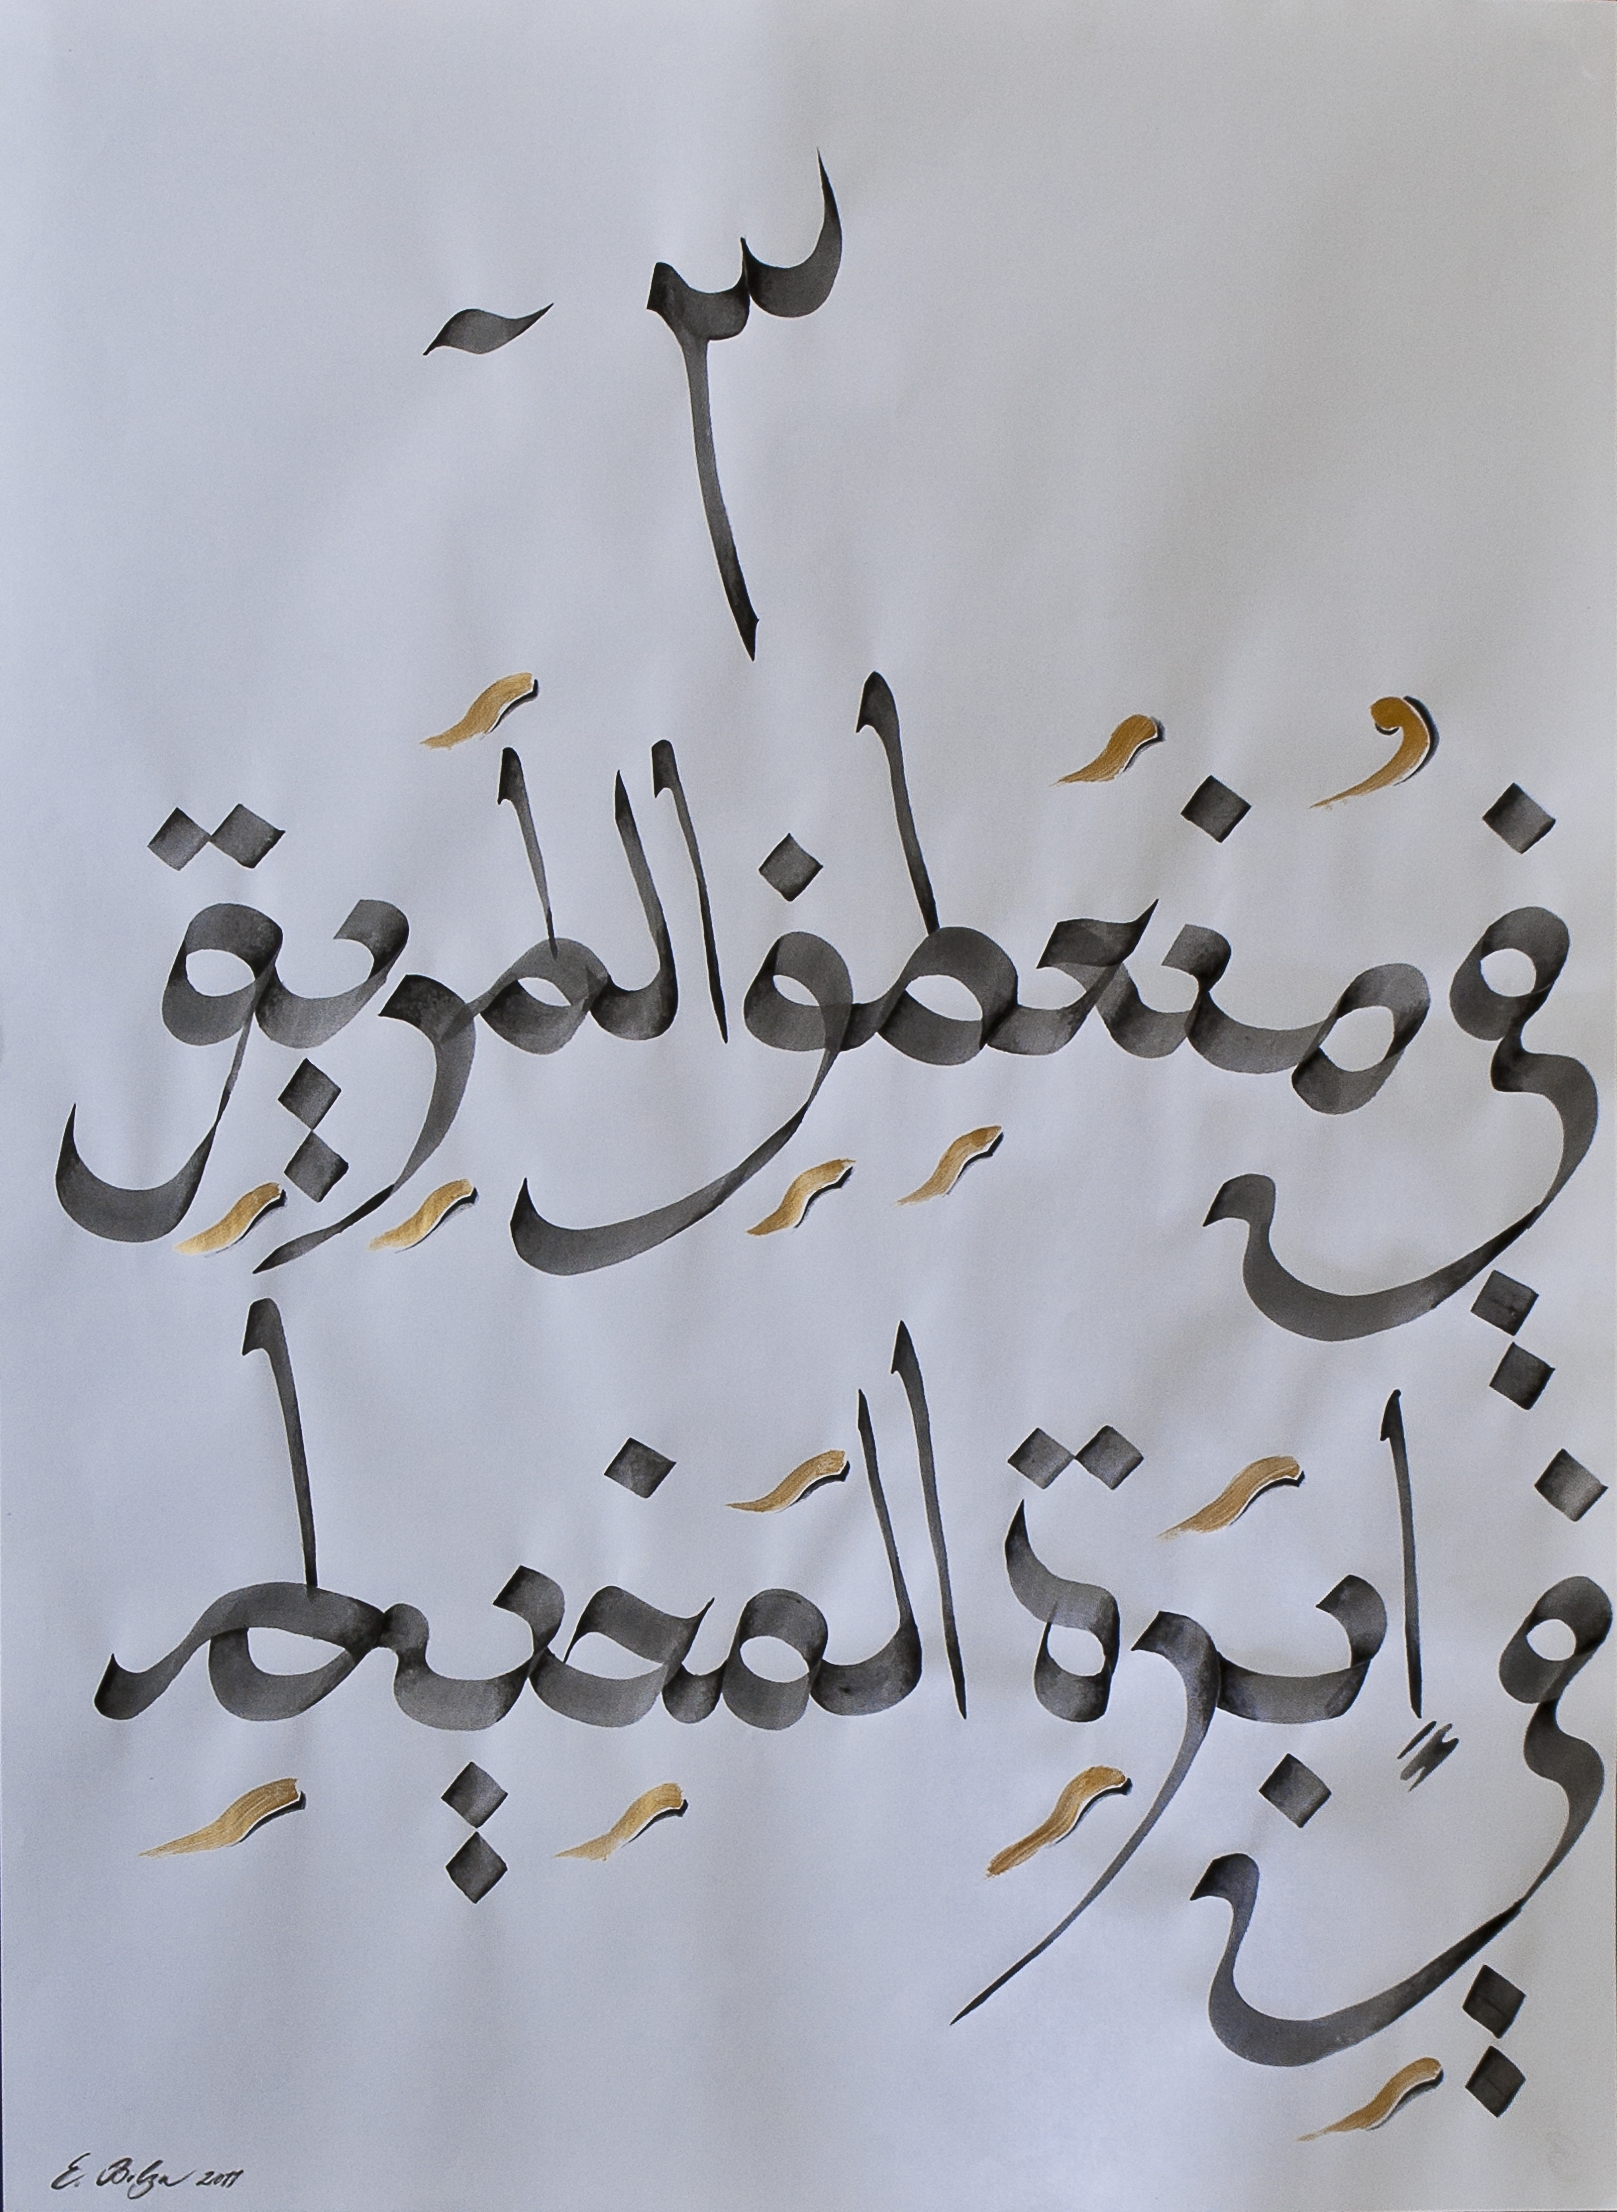   Calligraphic Installation Sheet   92 x 100 cm 